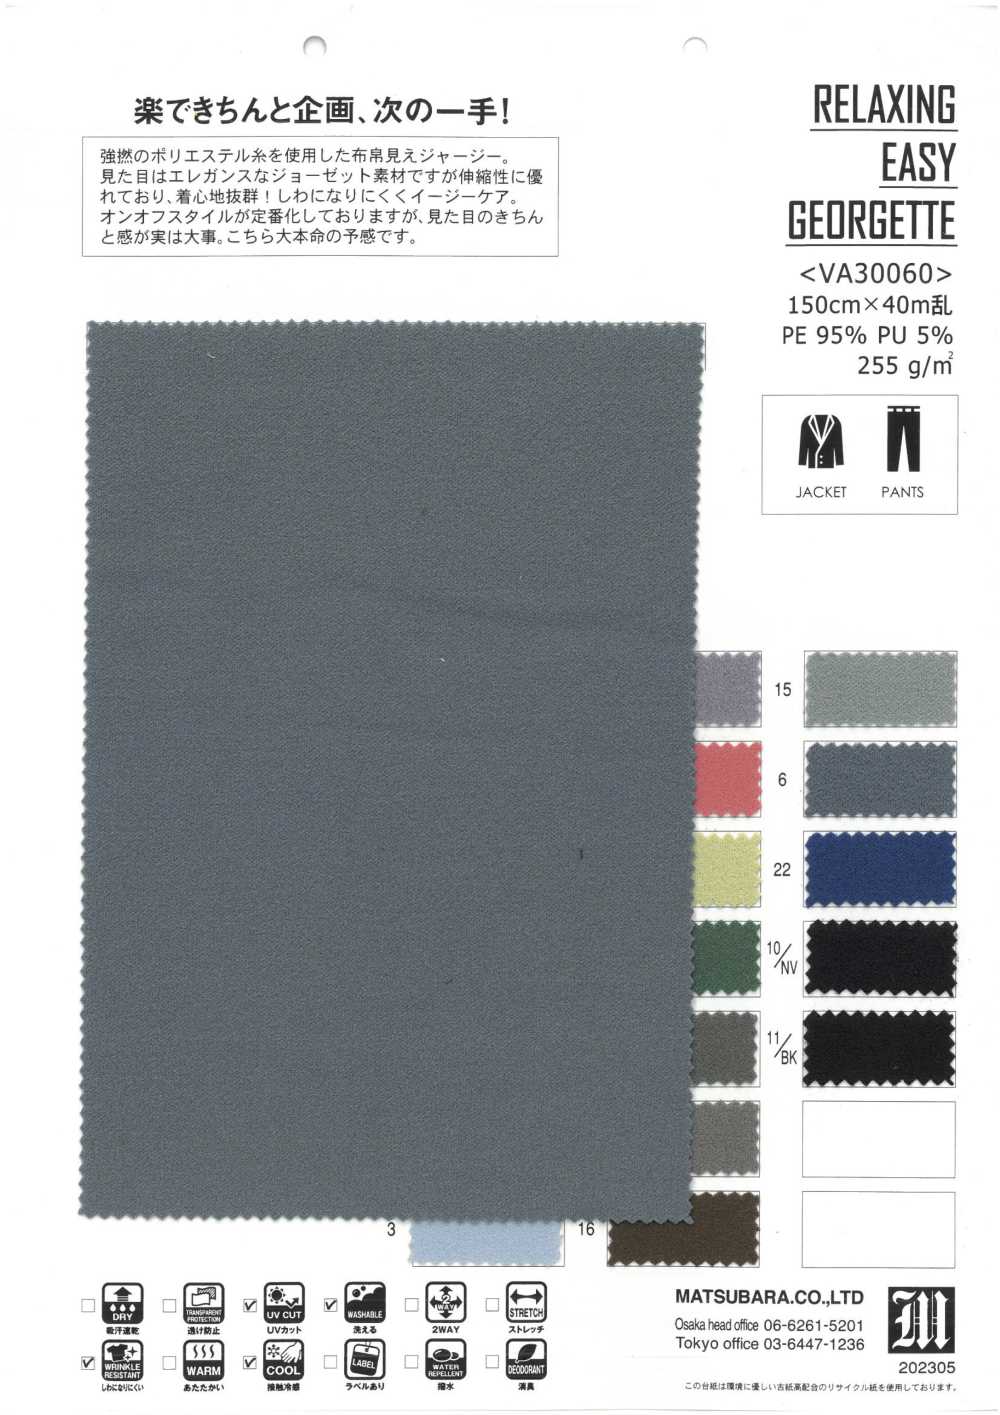 VA30060 RELAXING EASY GEORGETTE[Textile / Fabric] Matsubara